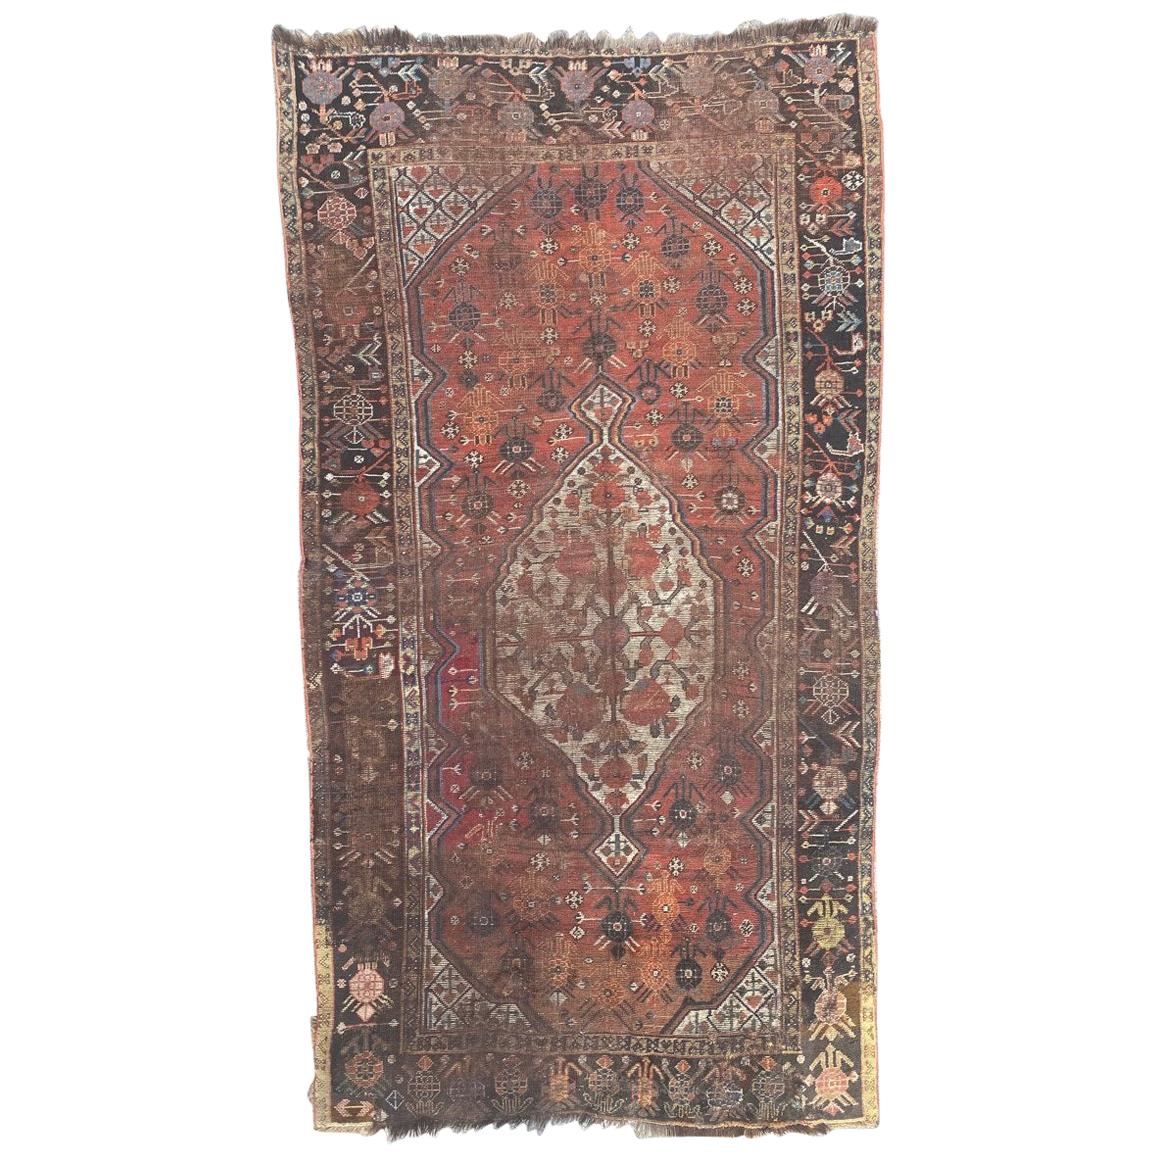 Bobyrug’s Distressed Antique Shiraz Rug